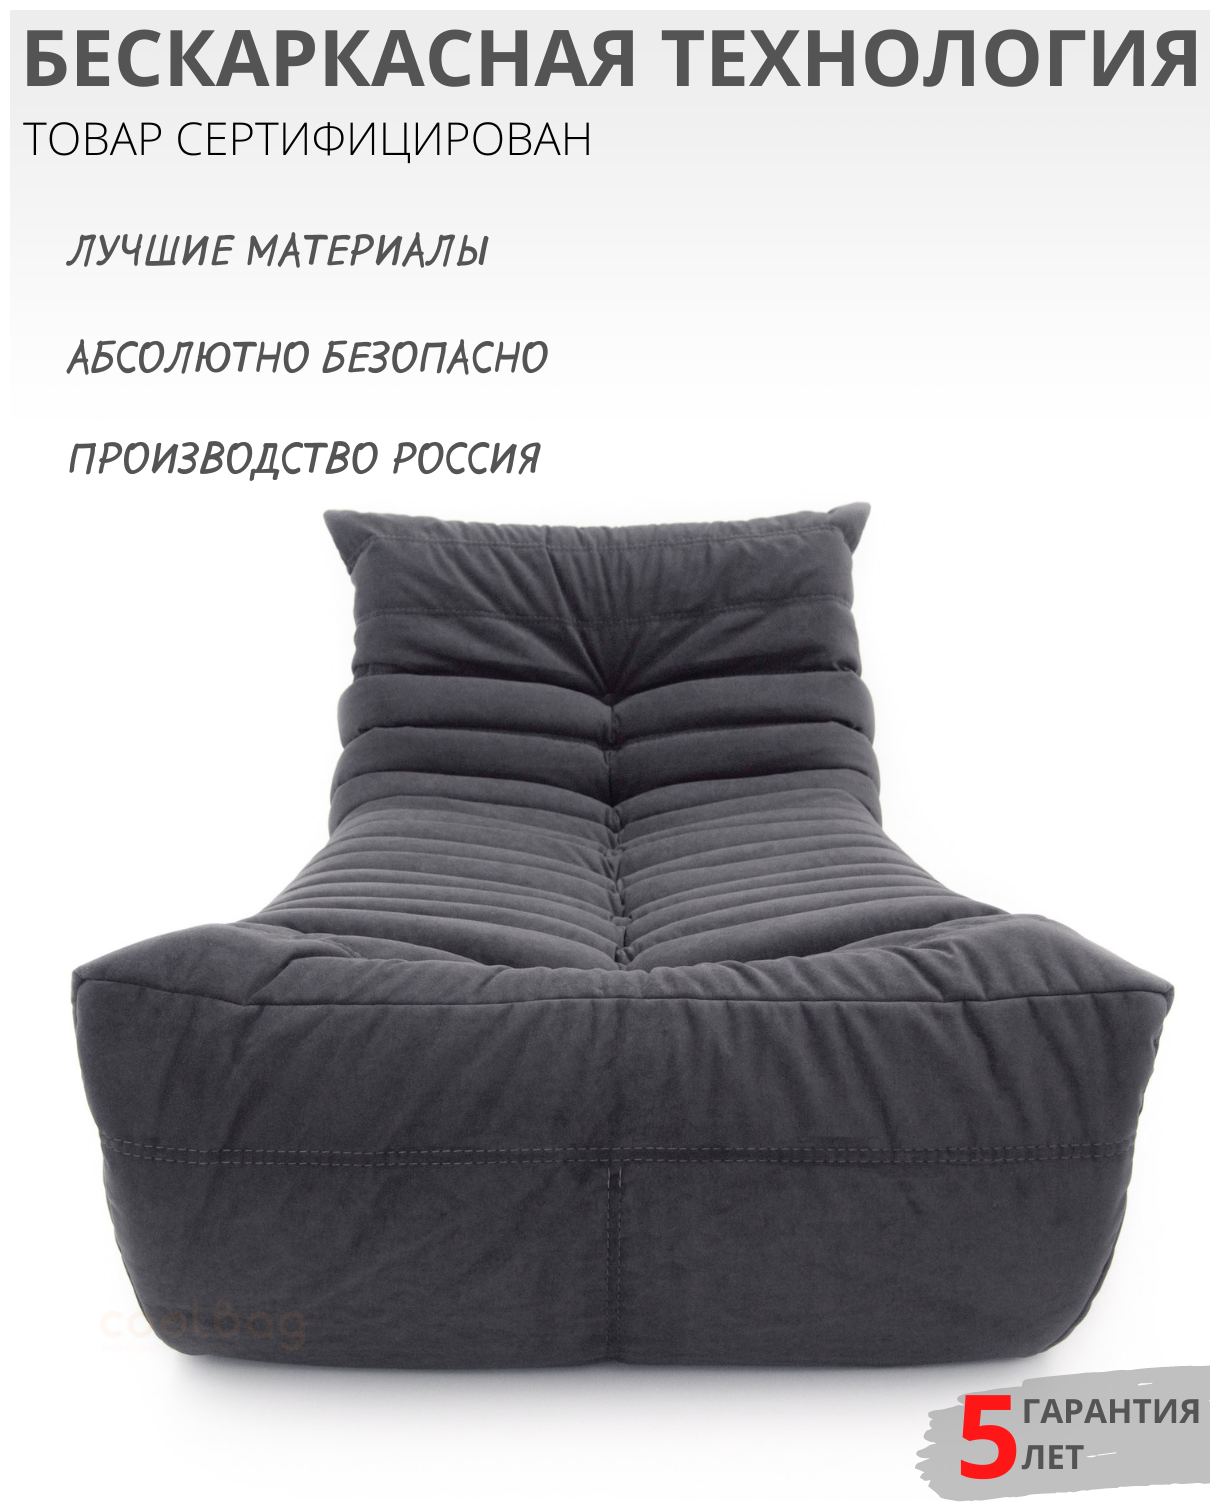 Кресло бескаркасное "Француз Оттоманка" Coolbag (90 см, велюр, темно-серый)